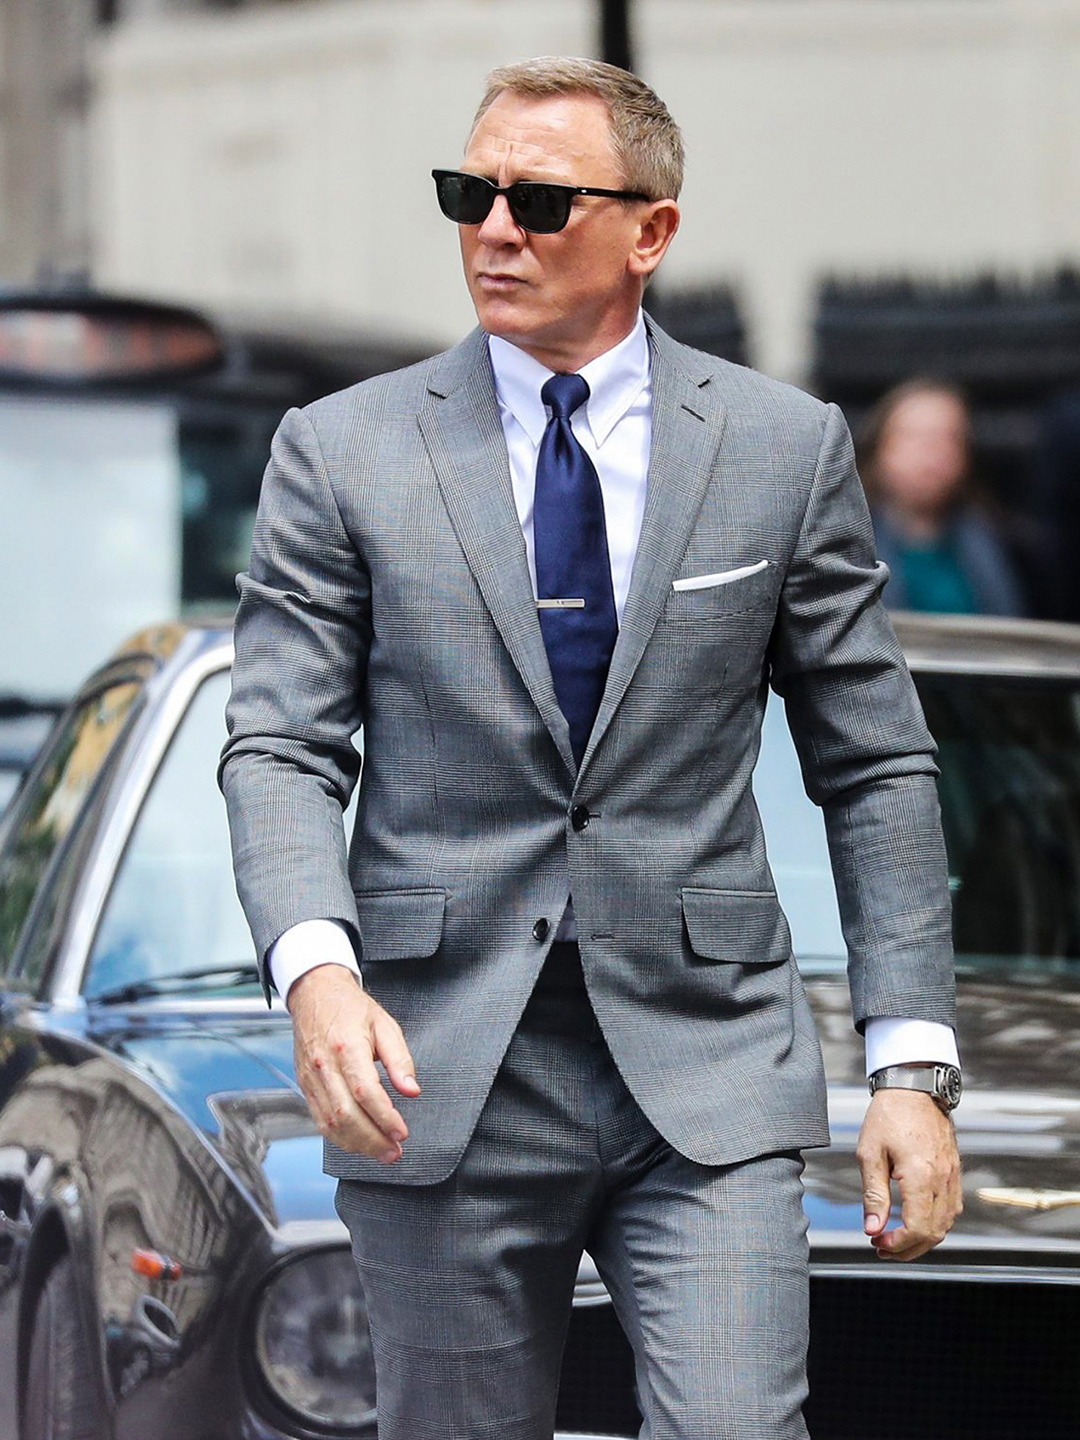 How to wear a light grey suit like James Bond